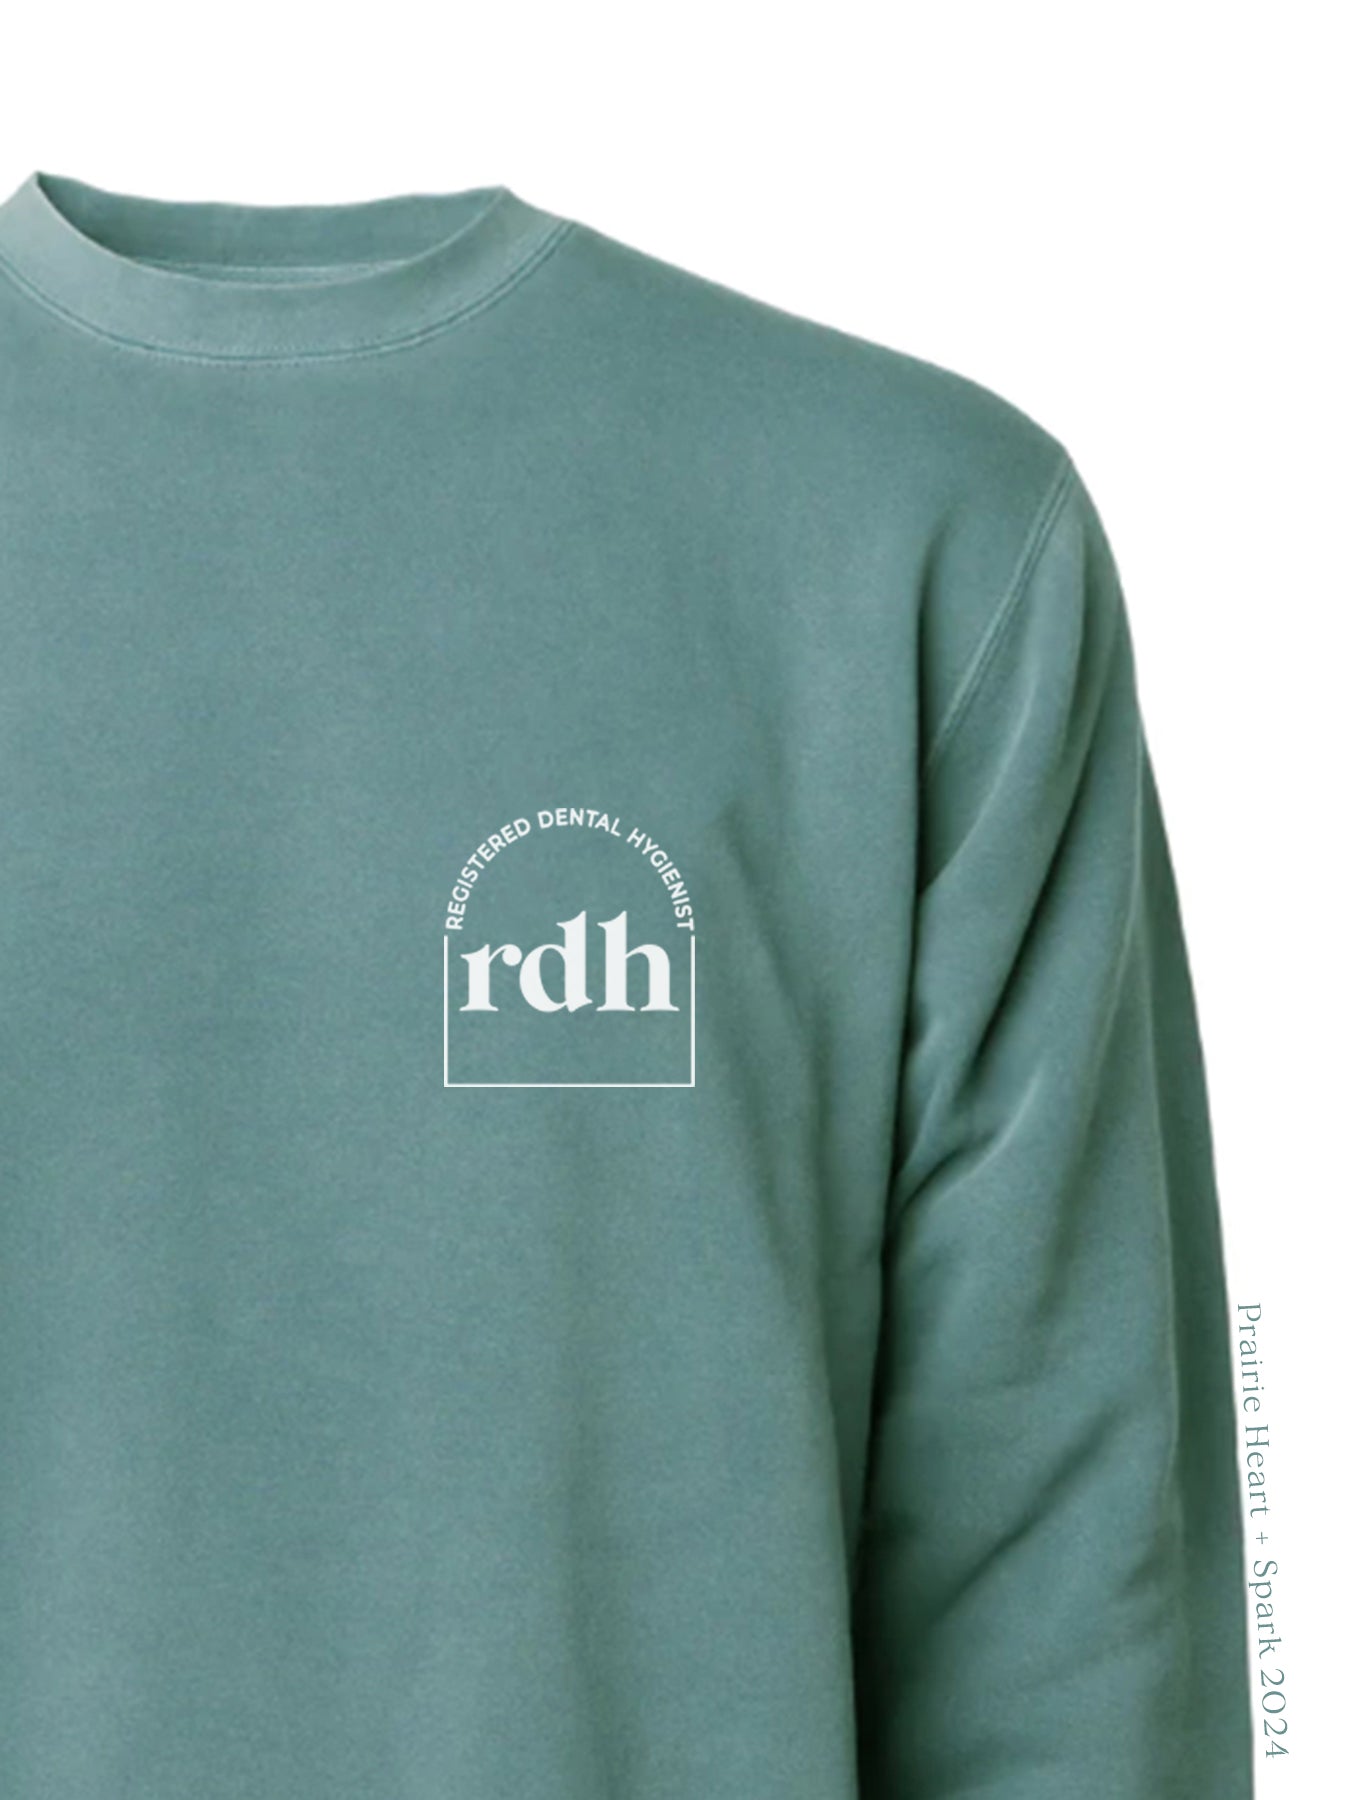 Cred Arch: RDH on Alpine Green sweatshirt